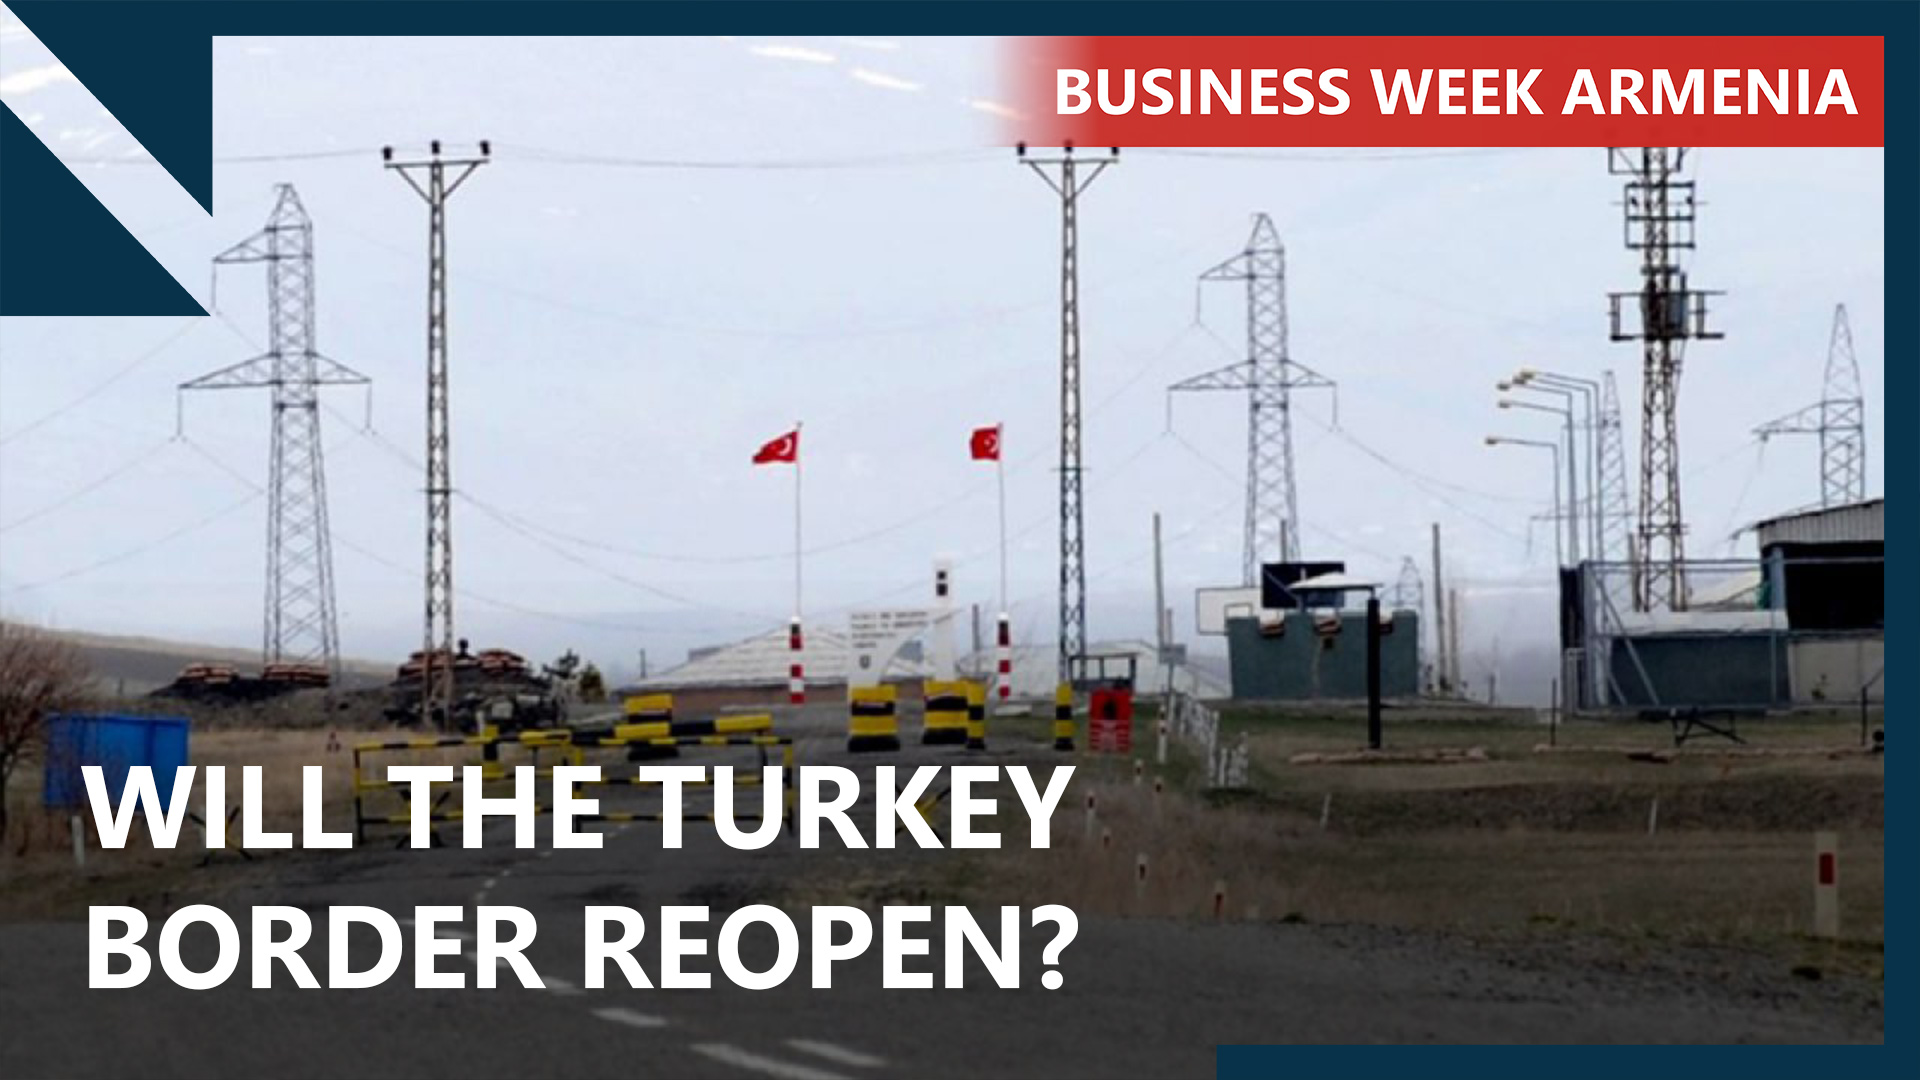 WILL-THE-TURKEY-BORDER-REOPEN-12